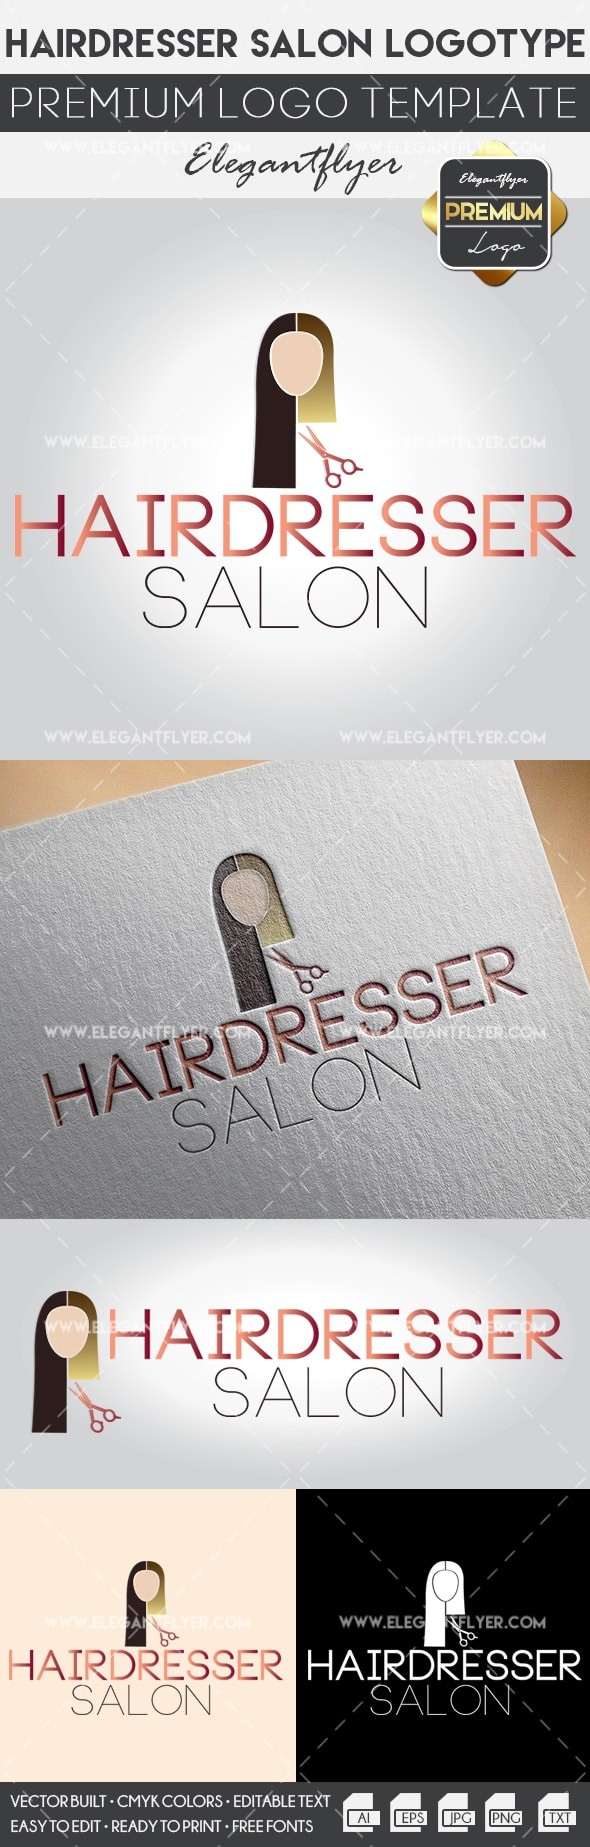 Hairdresser Salon by ElegantFlyer